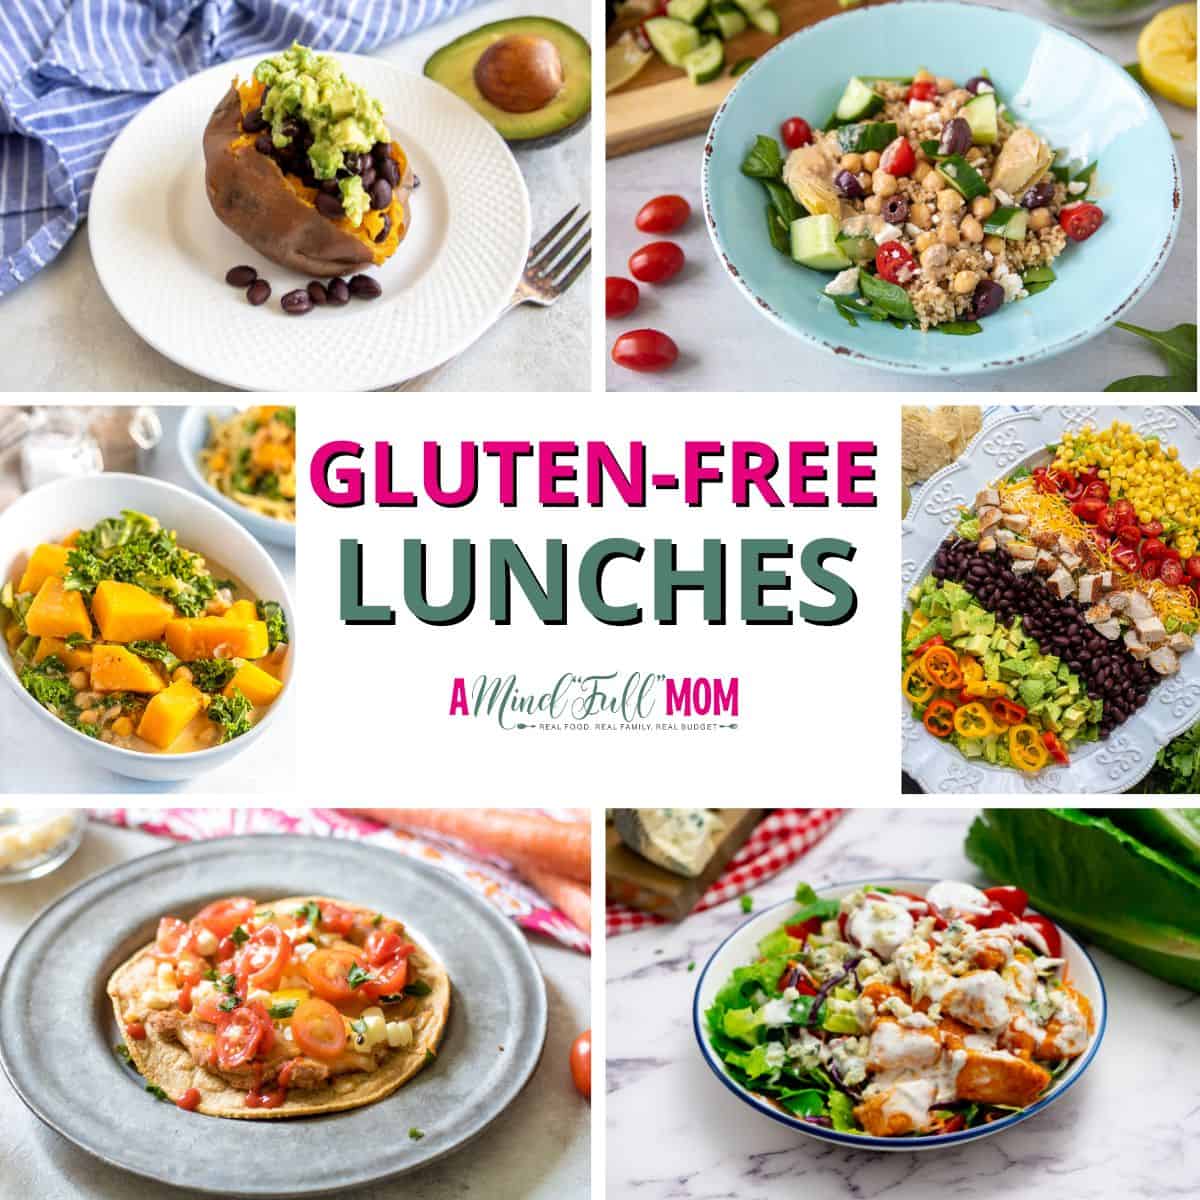 Gluten-free lunch ideas